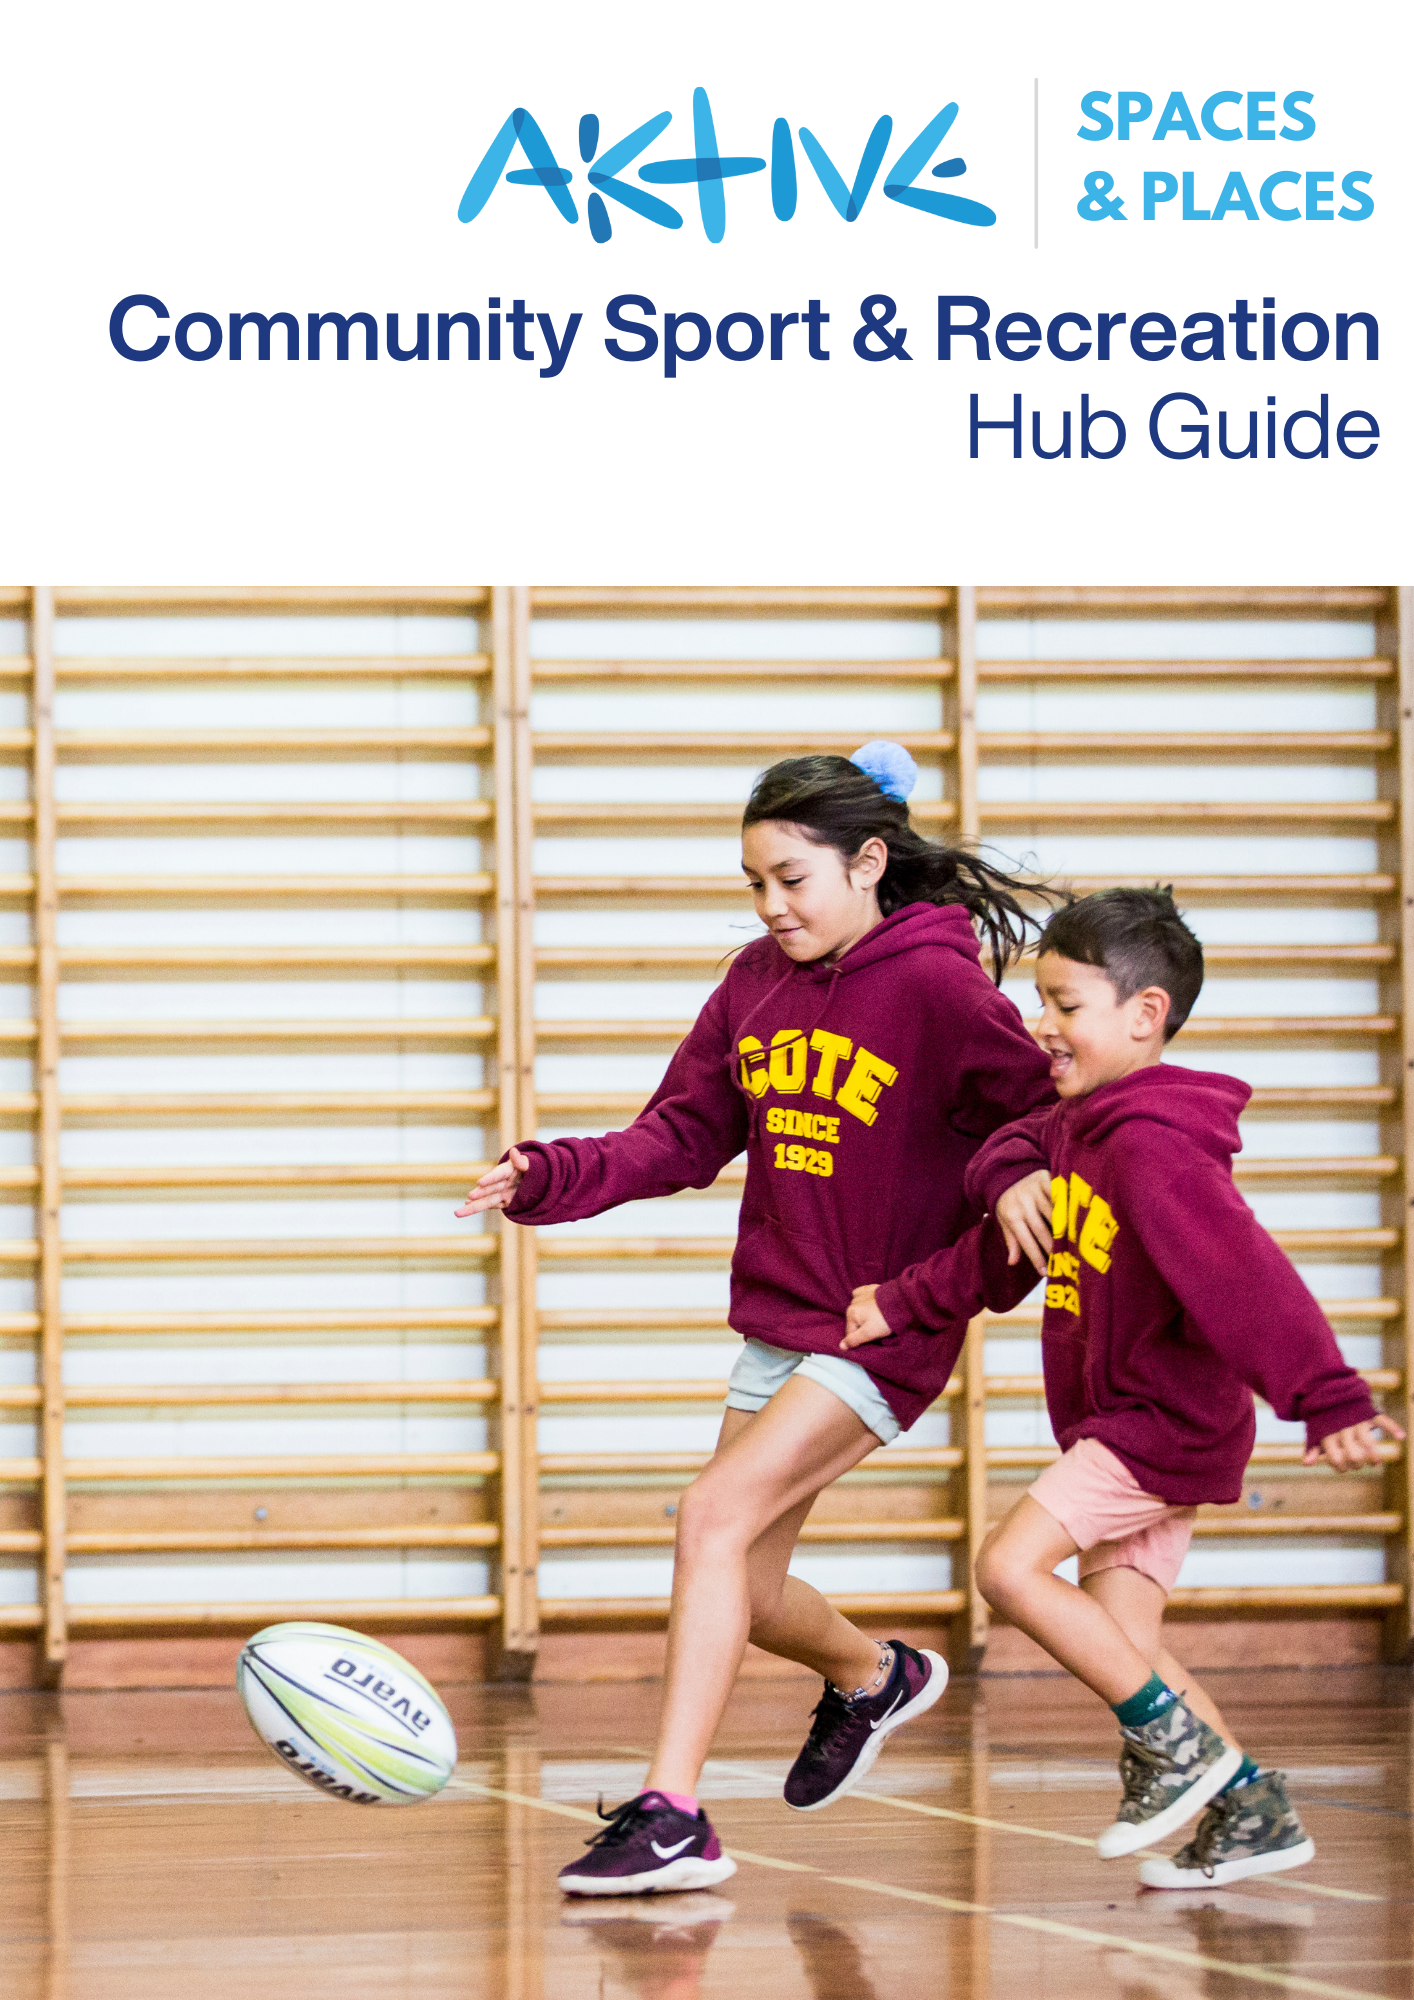 Community Sport & Recreation Hub Guide